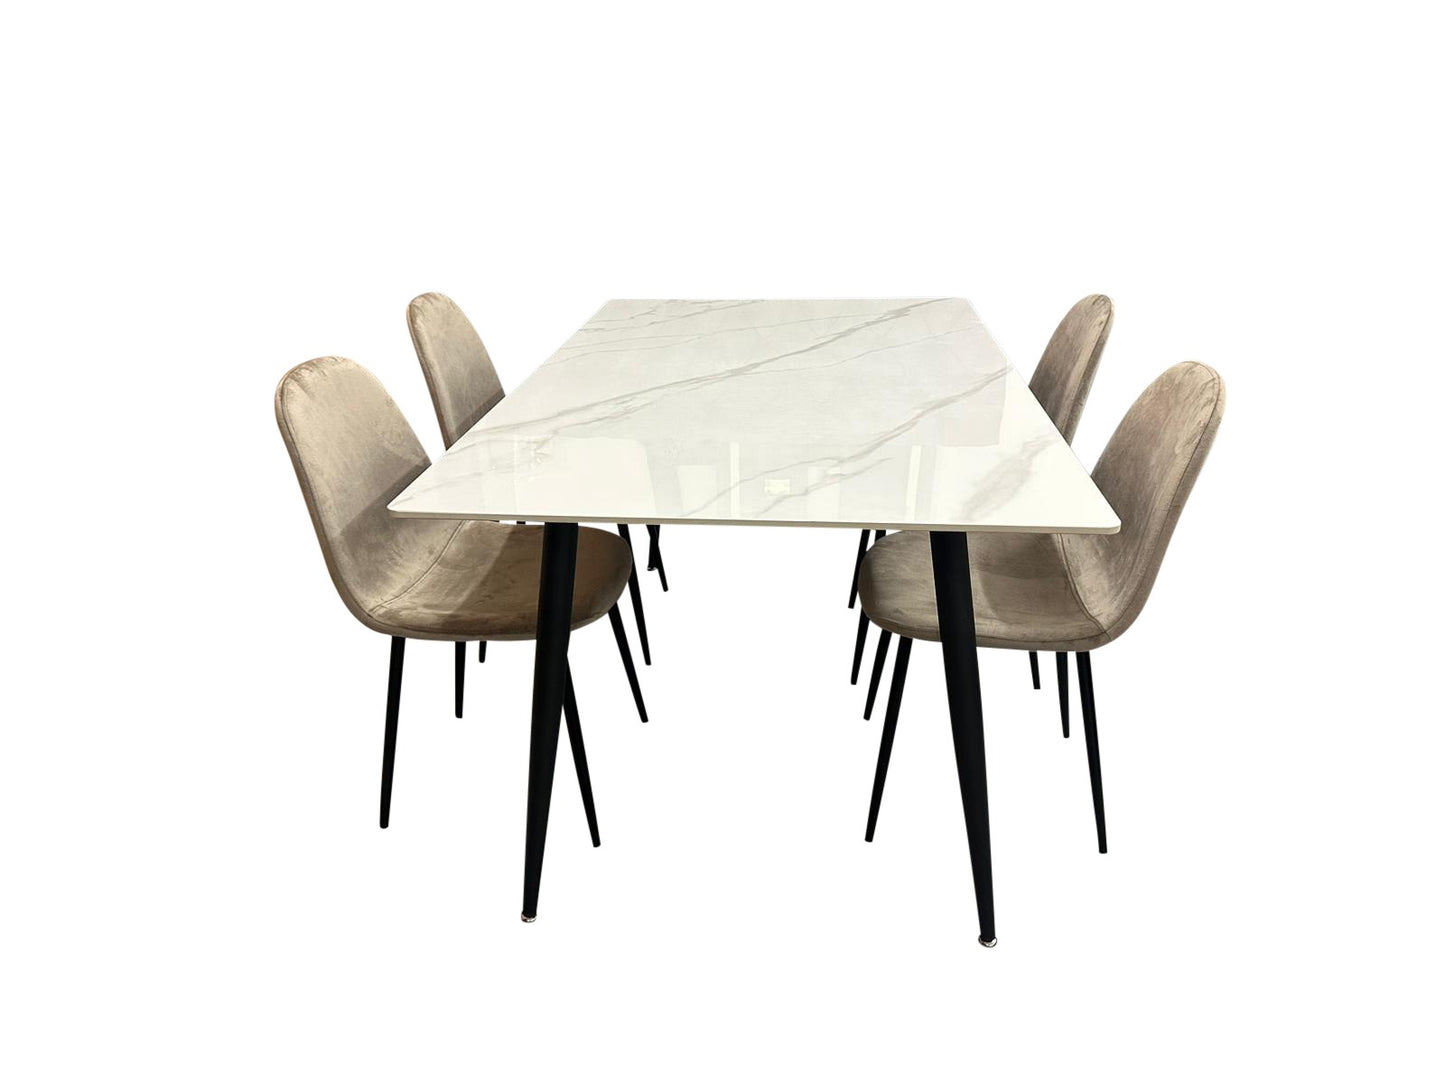 Dining Set - Stone Table 1.5m x 90cm